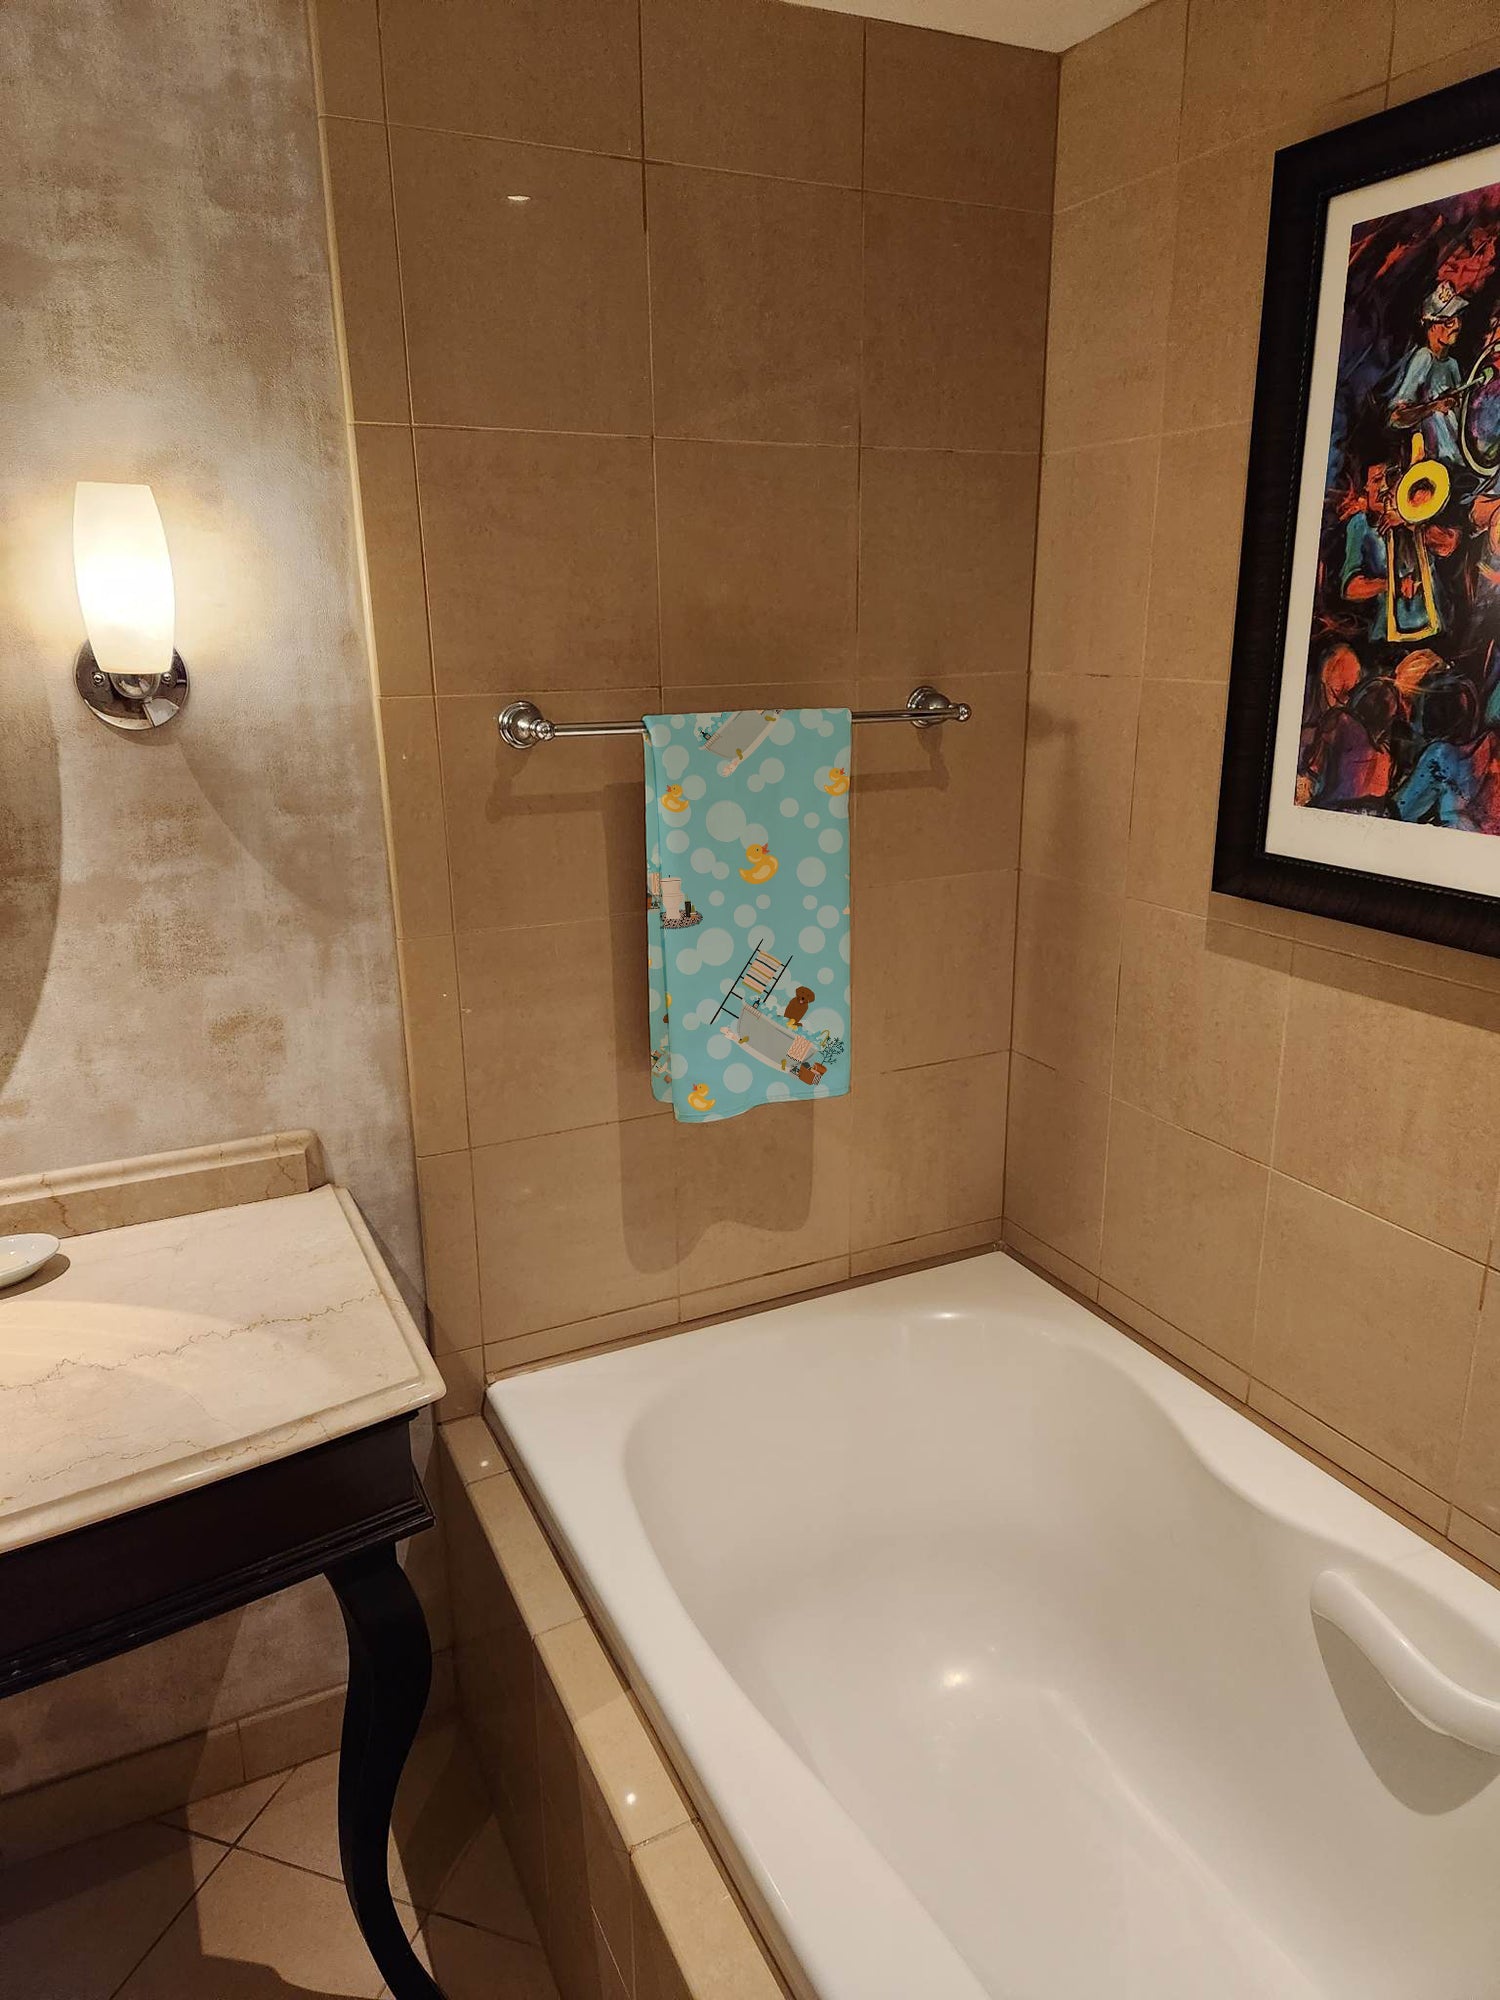 Buy this Mahogany Golden Retriever Bath Towel Large